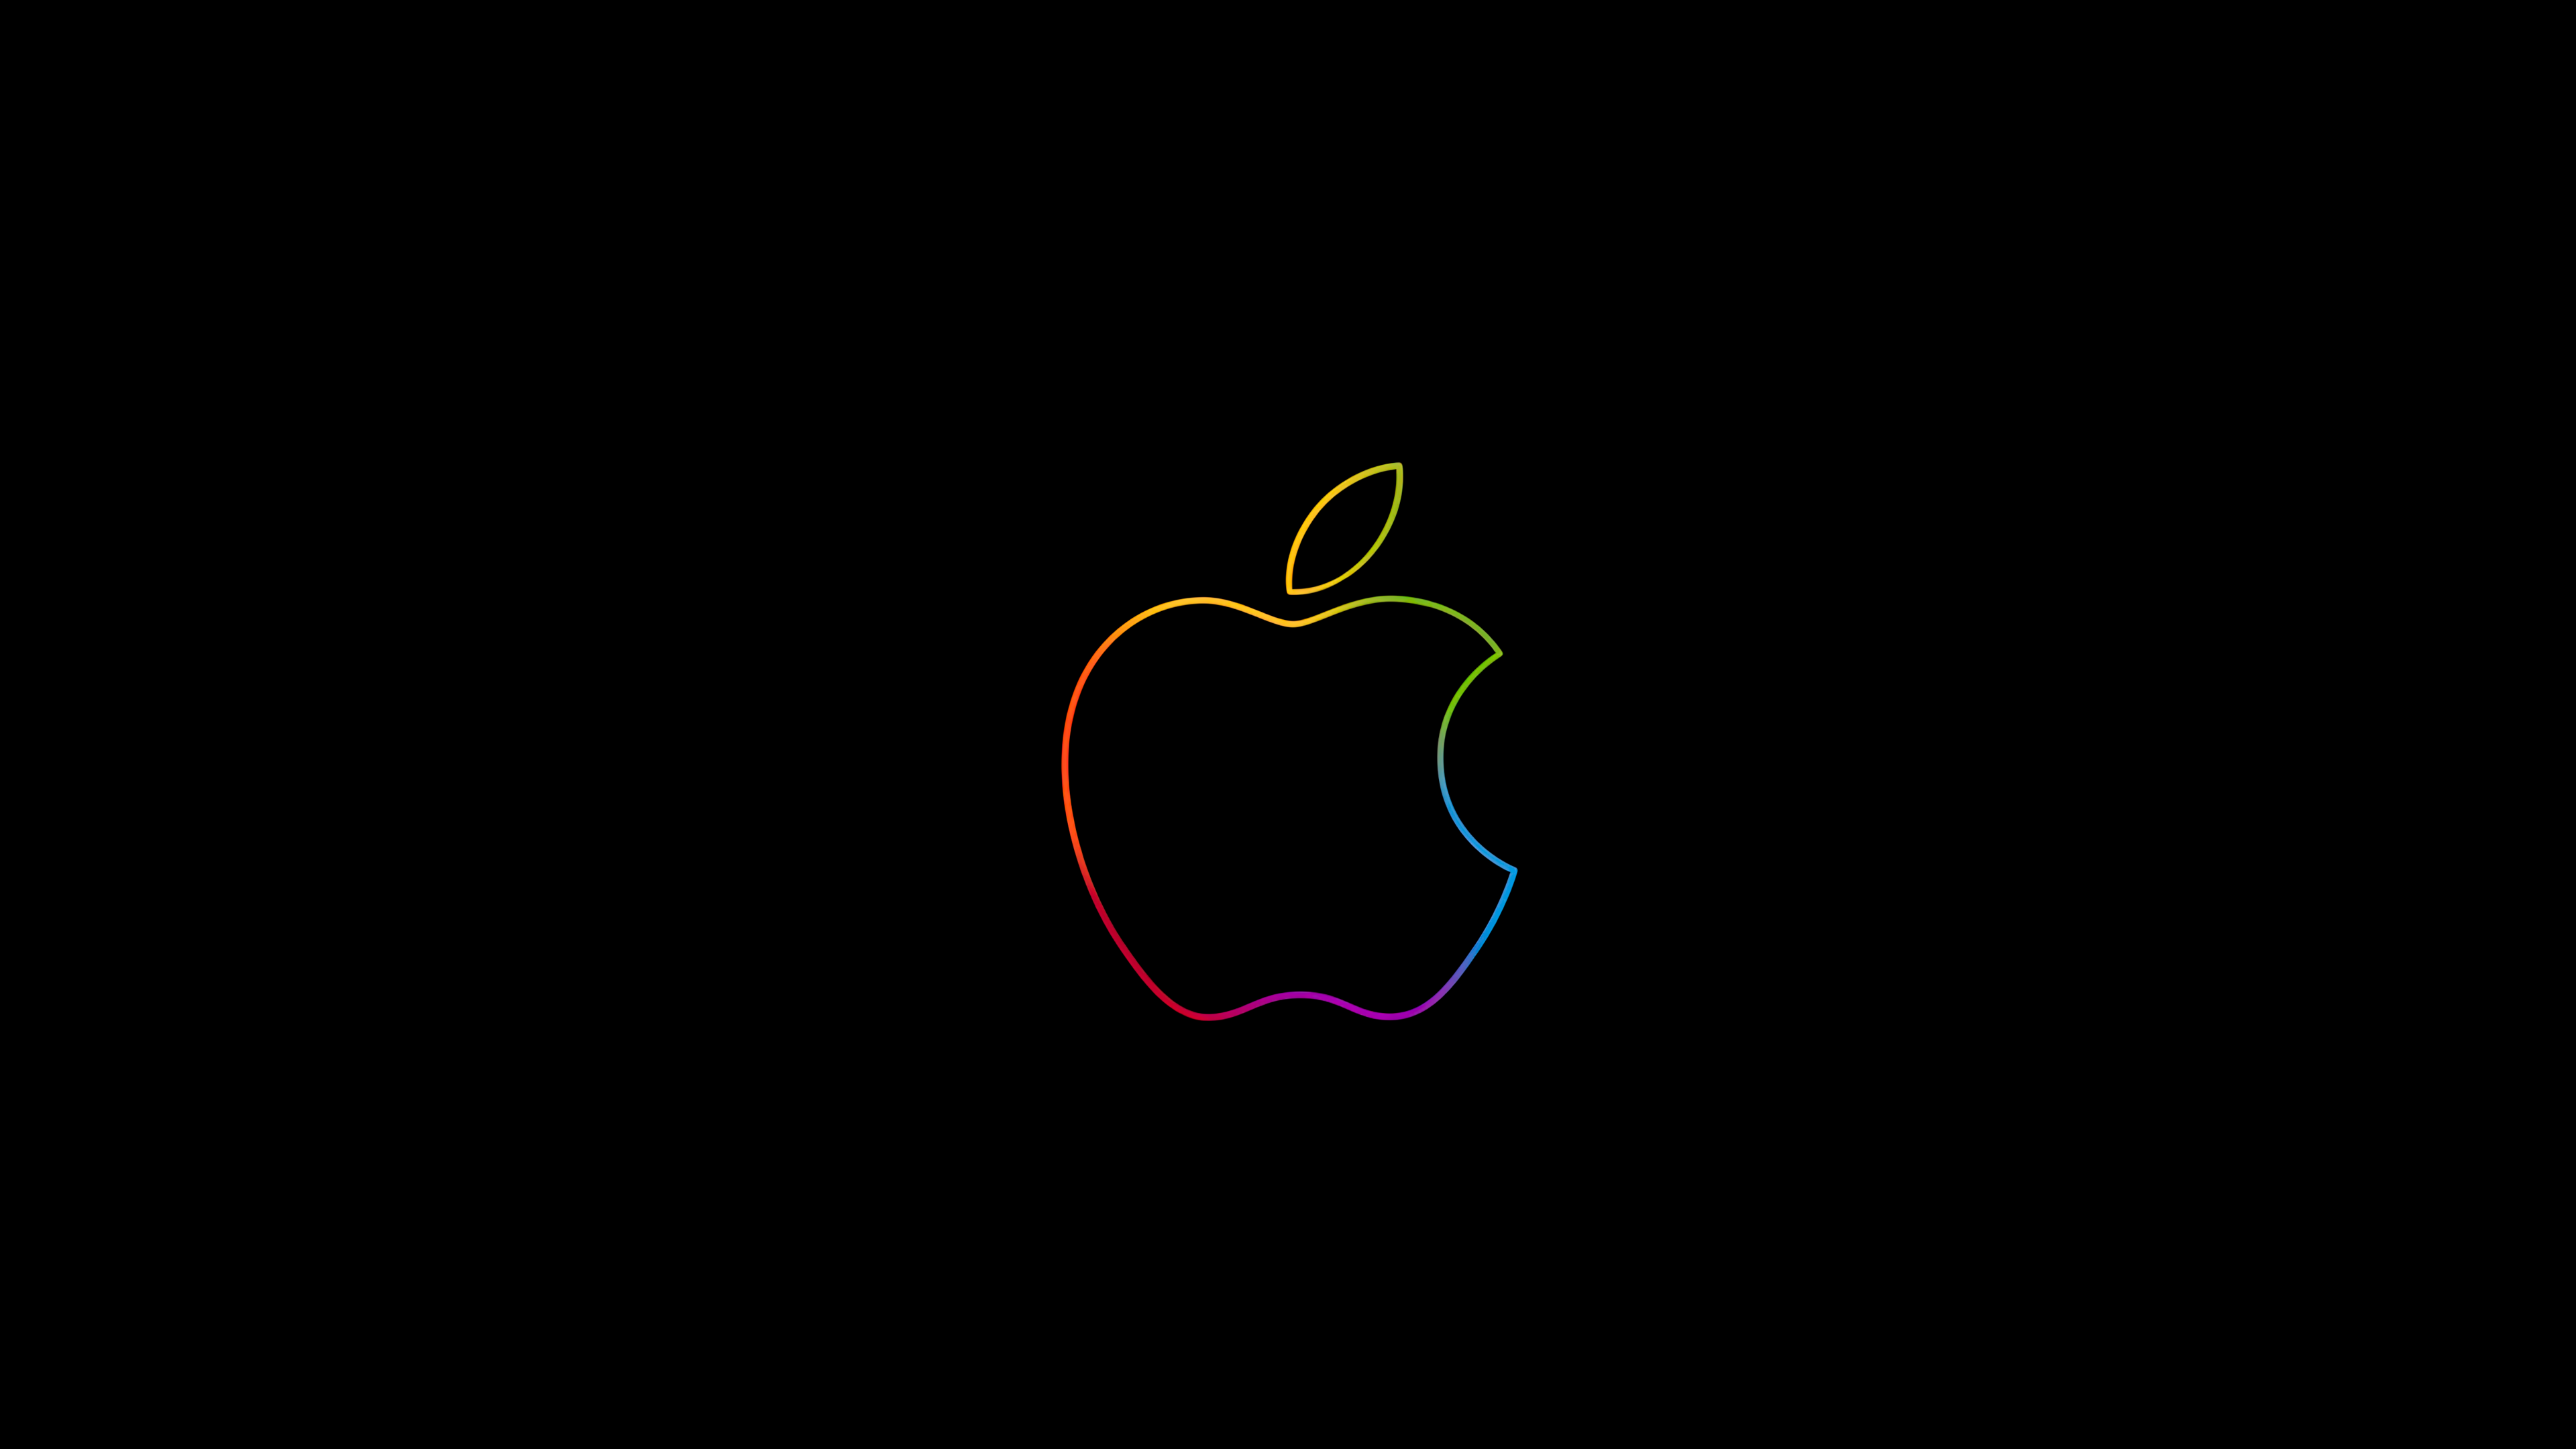 iPhone 12 Apple Logo 4K Wallpaper 62178